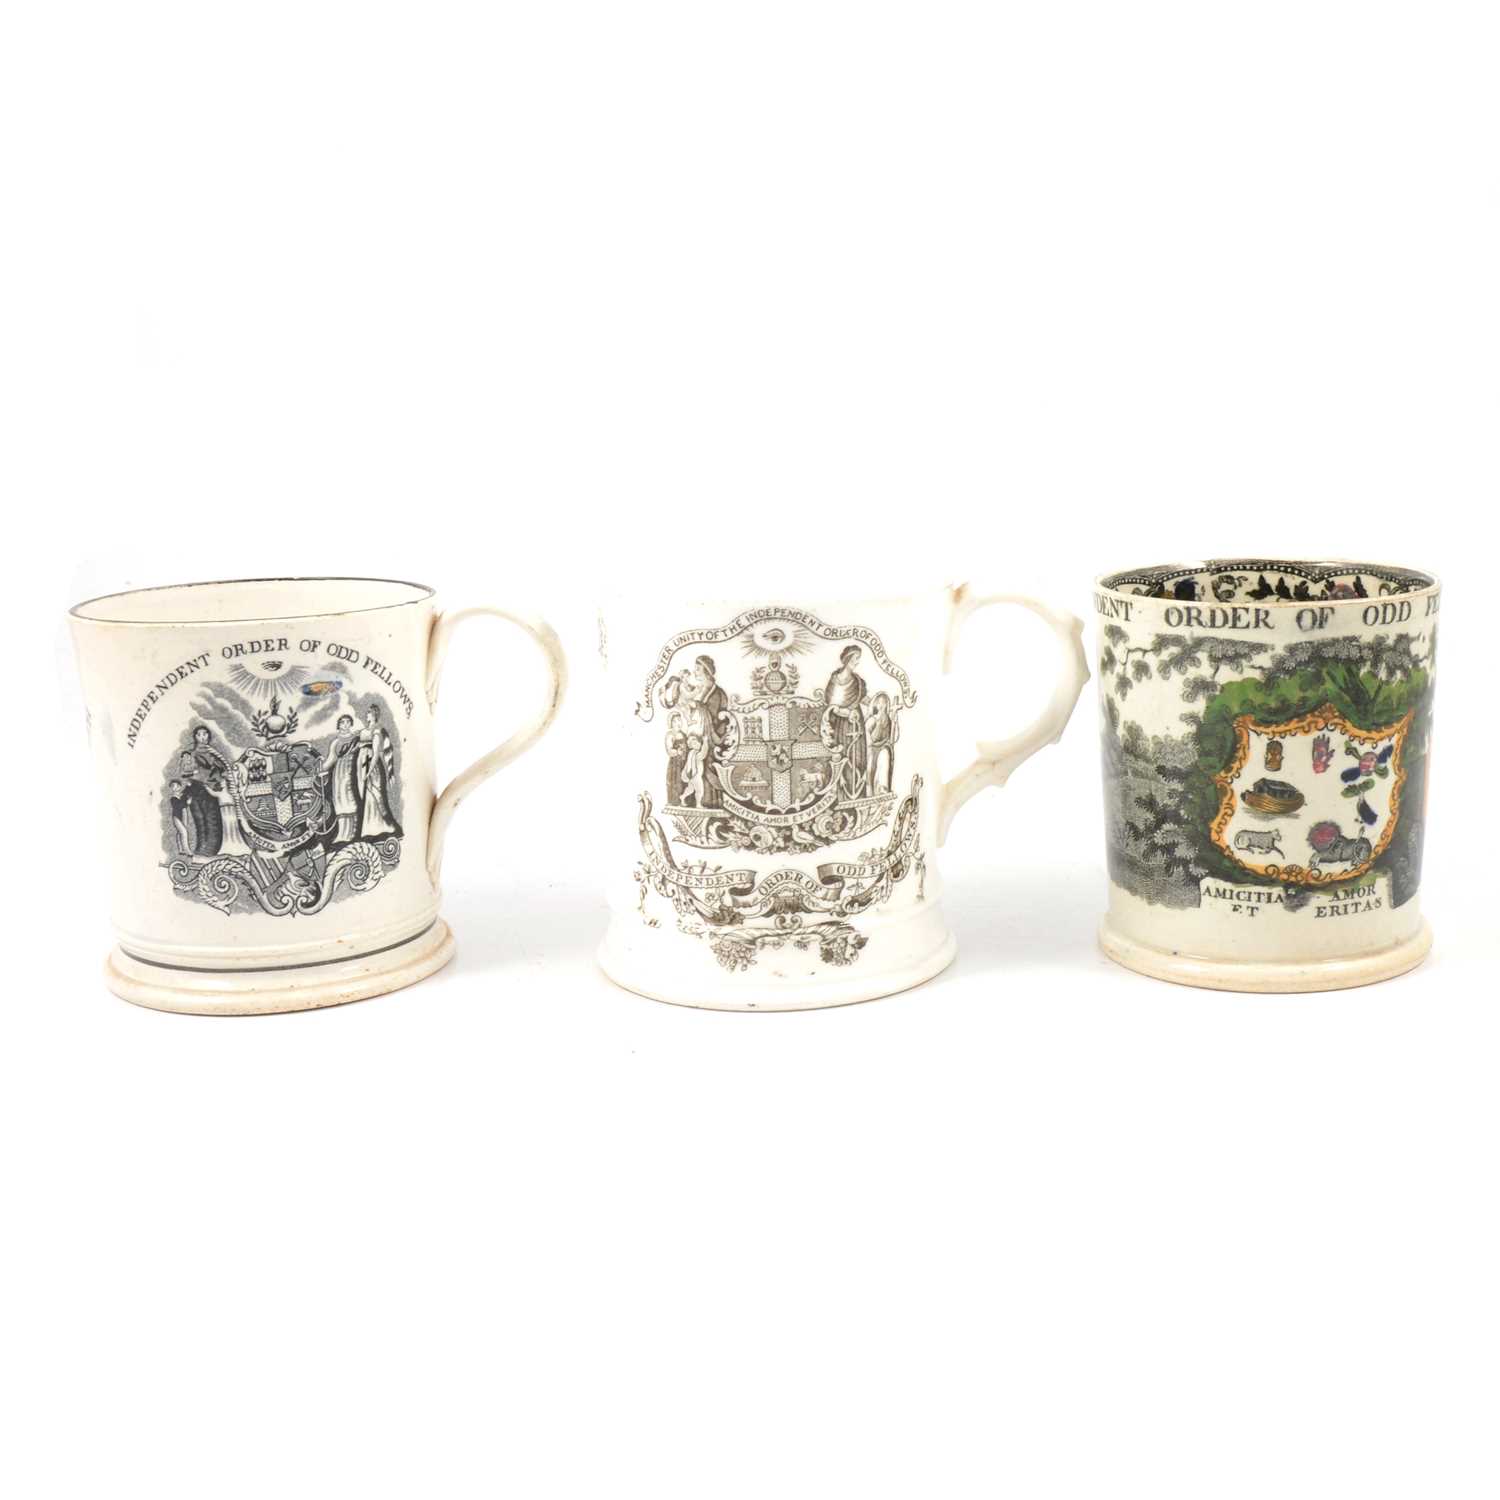 Lot 55 - Three 19th century Pearlwear mugs, Order of Oddfellows transfers